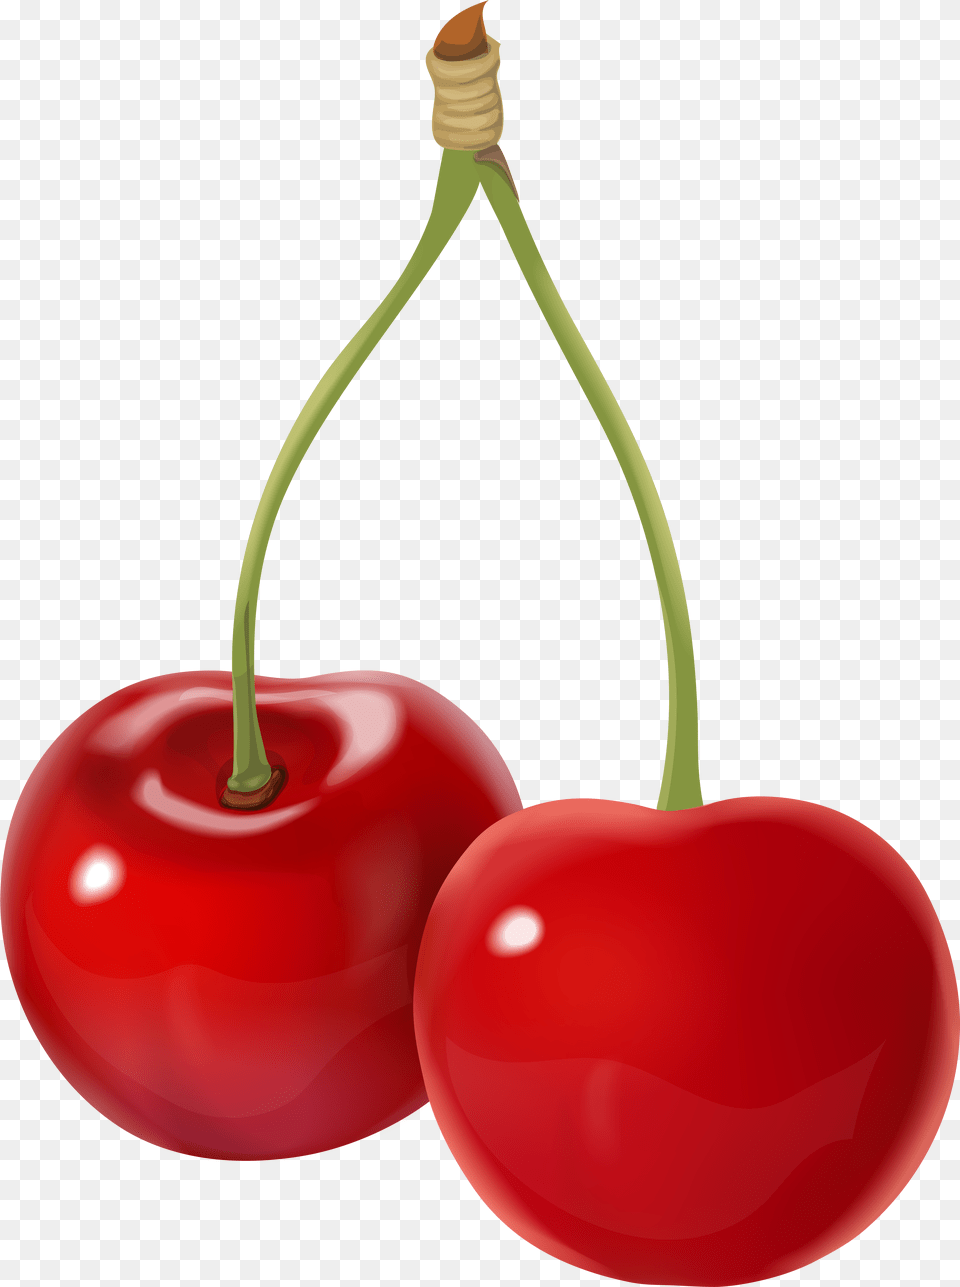 Cherries Clip Art Transparent Image Png